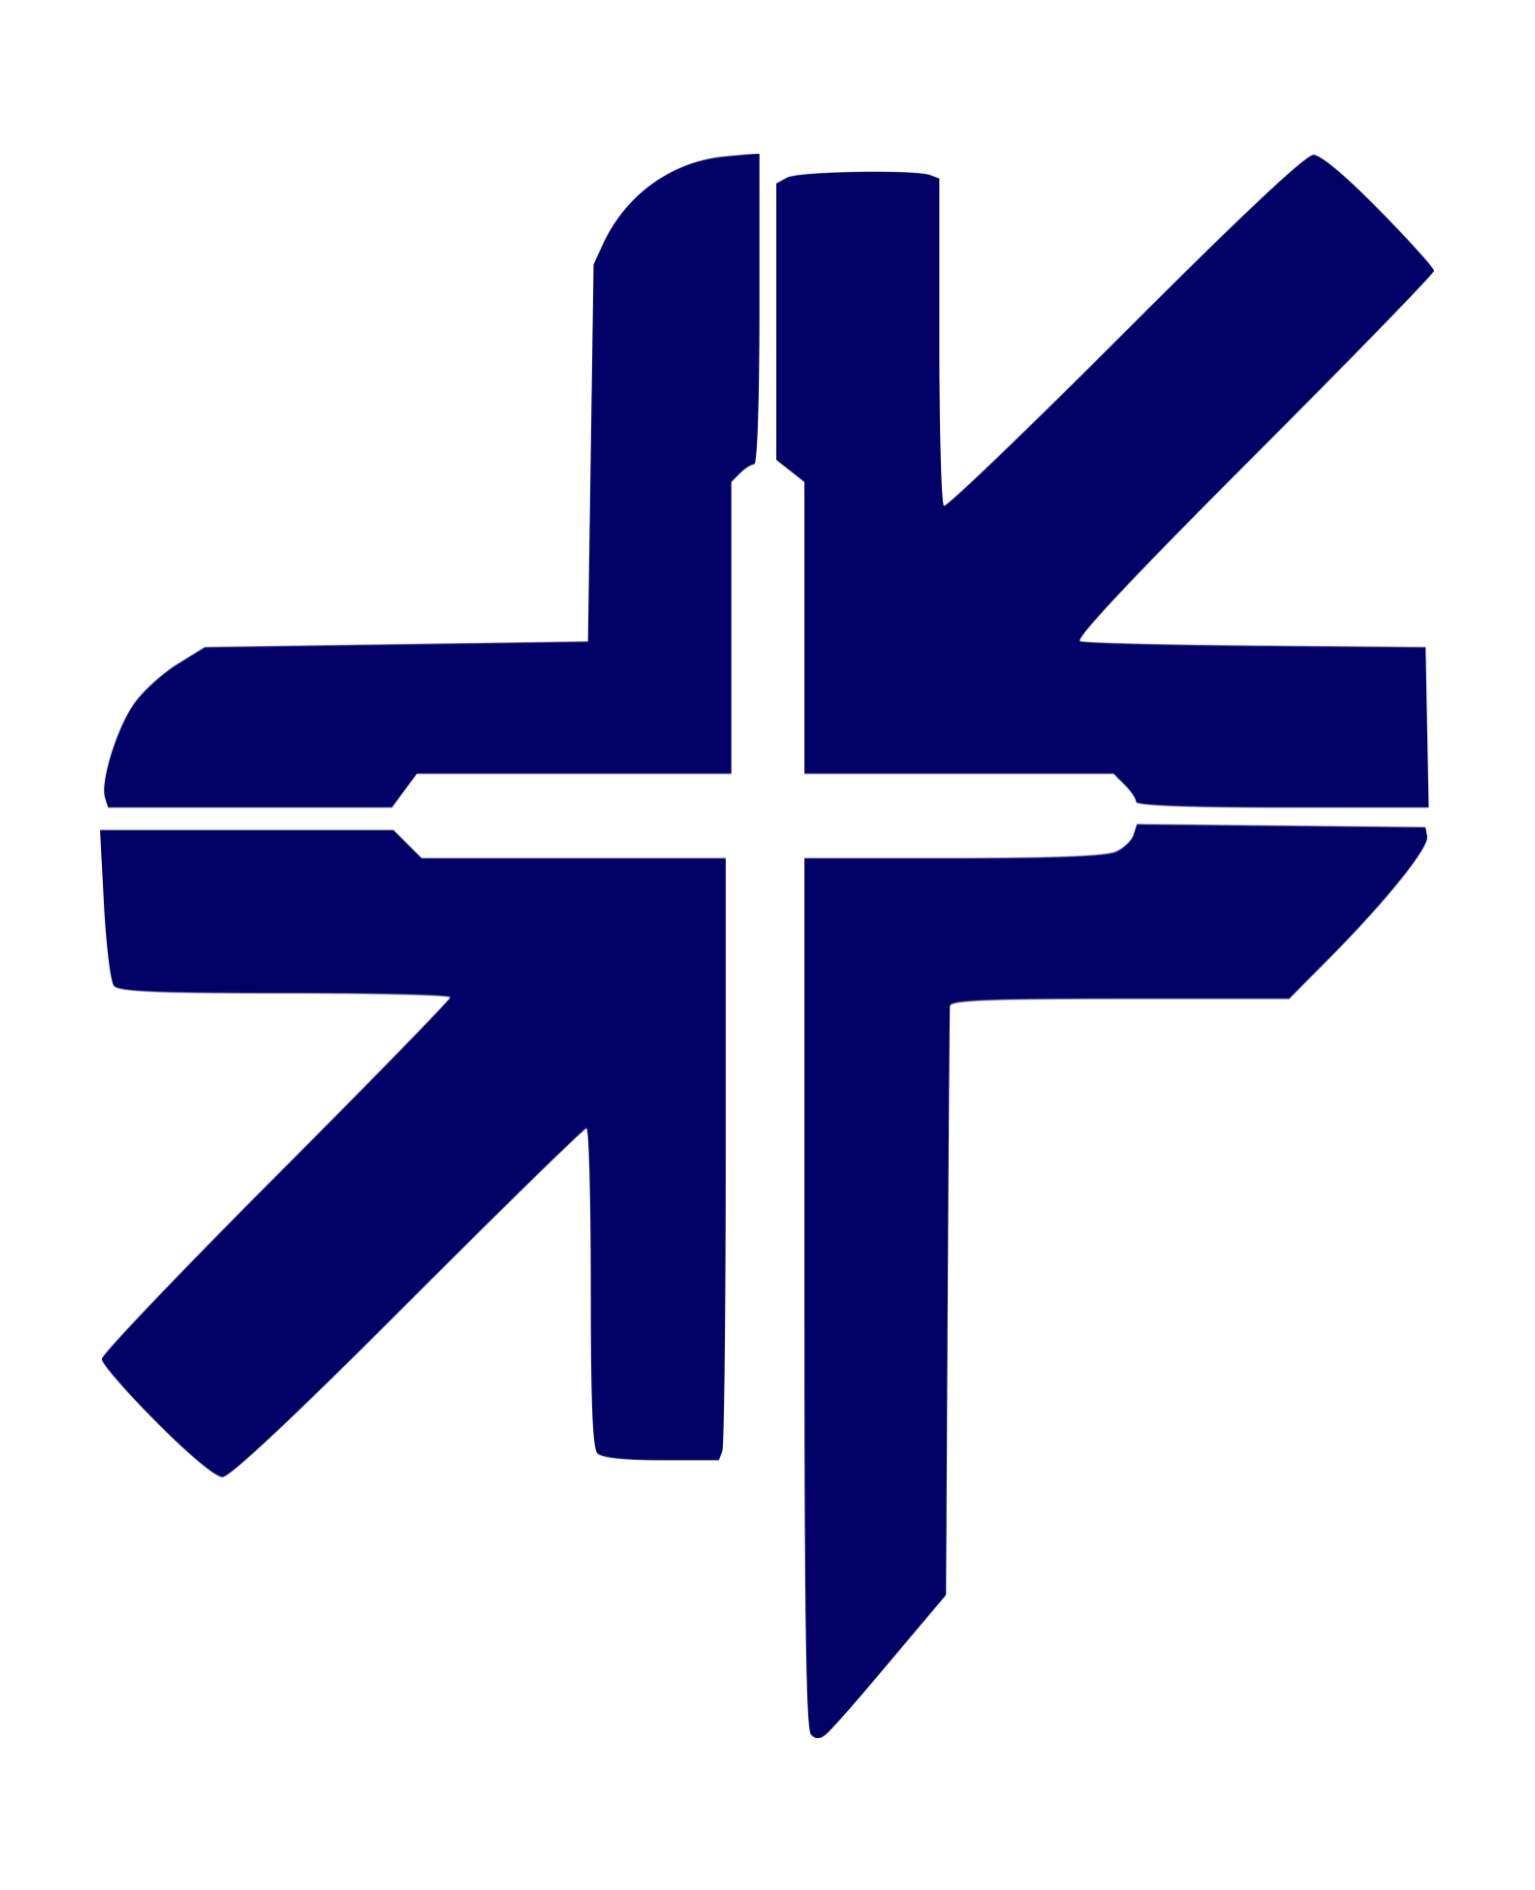 Monash Parkville Christian Union (CU)